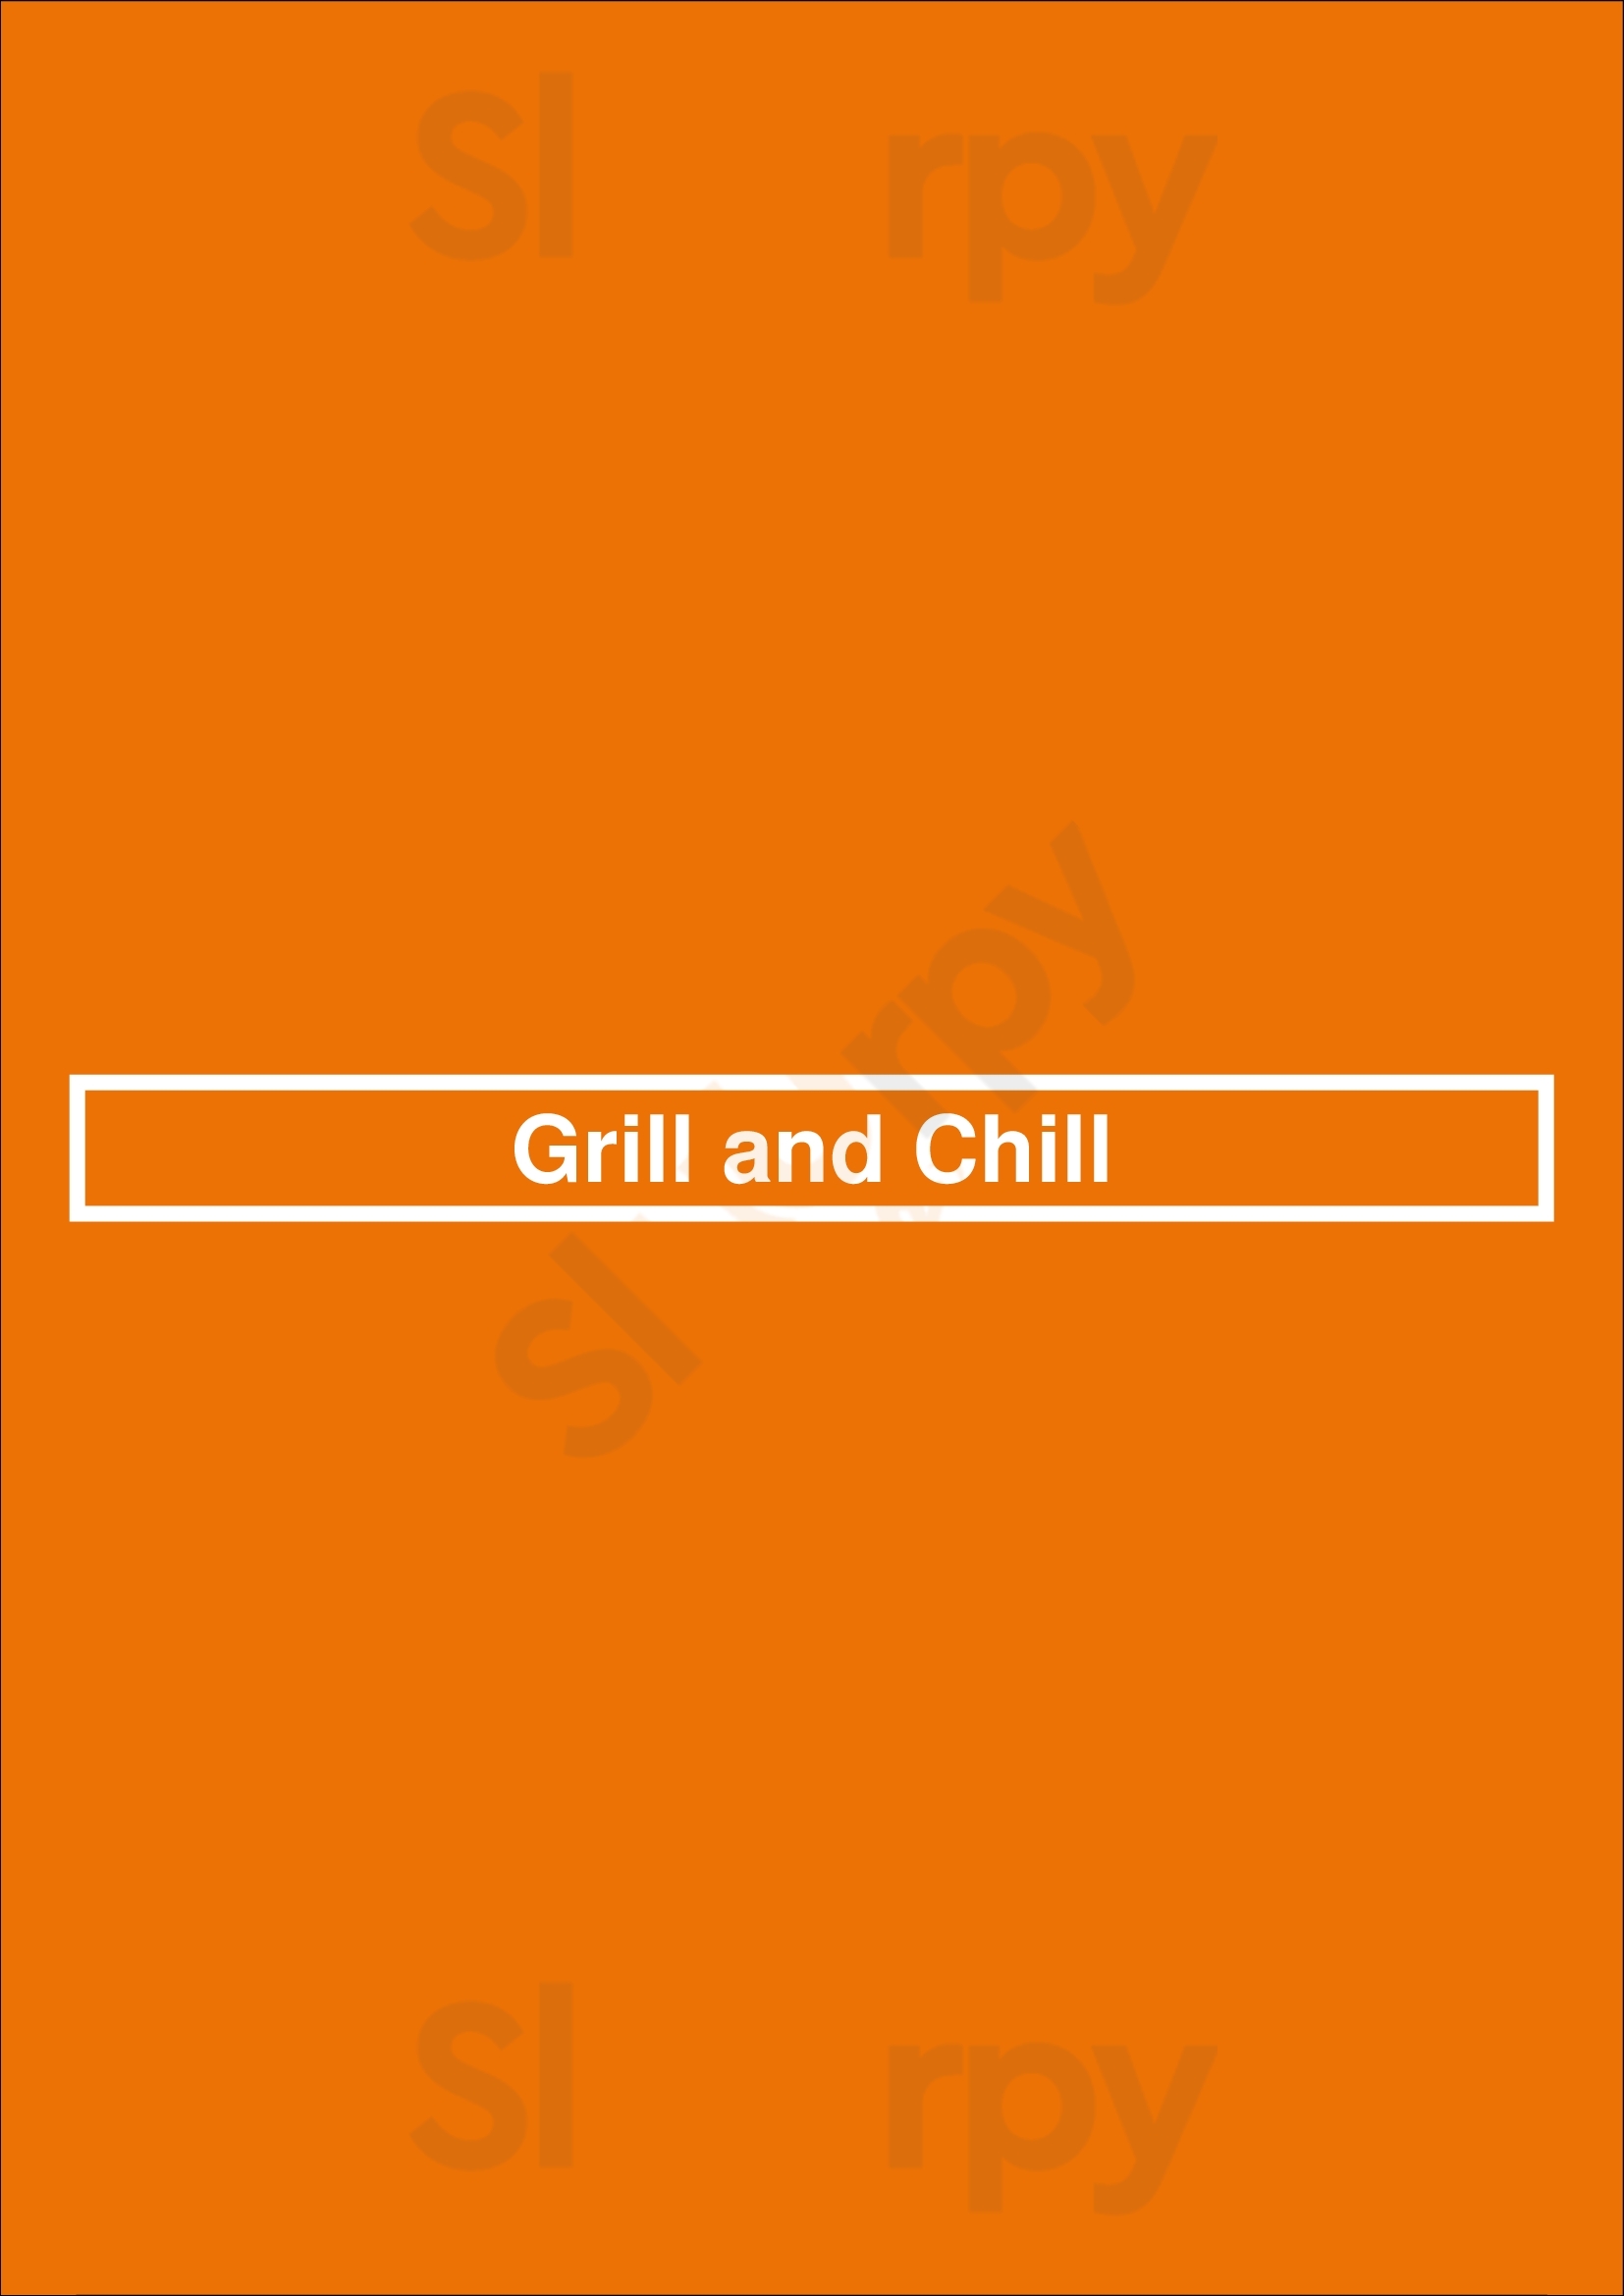 Grill And Chill Bradford Menu - 1